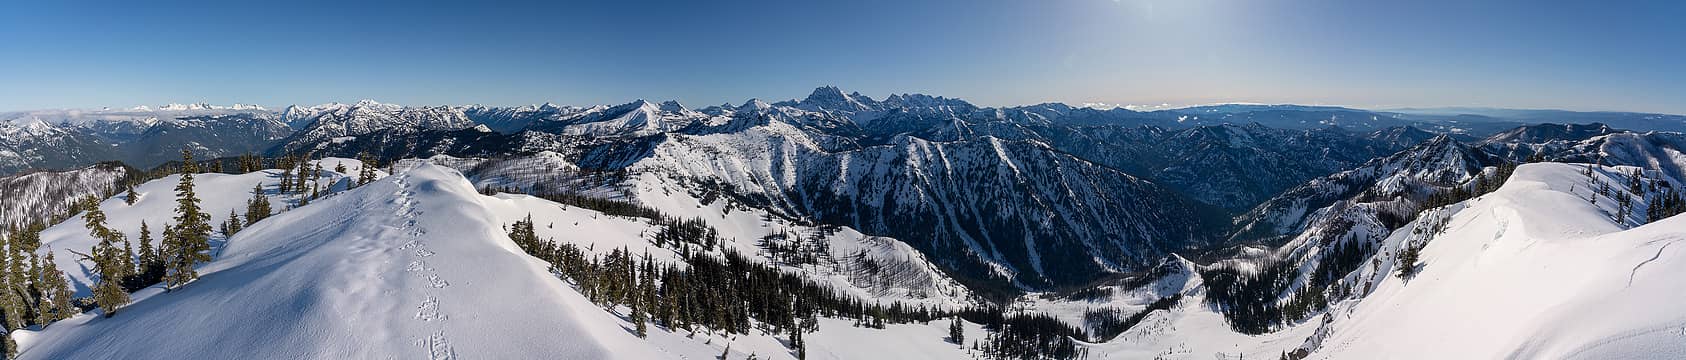 Jolly summit panorama